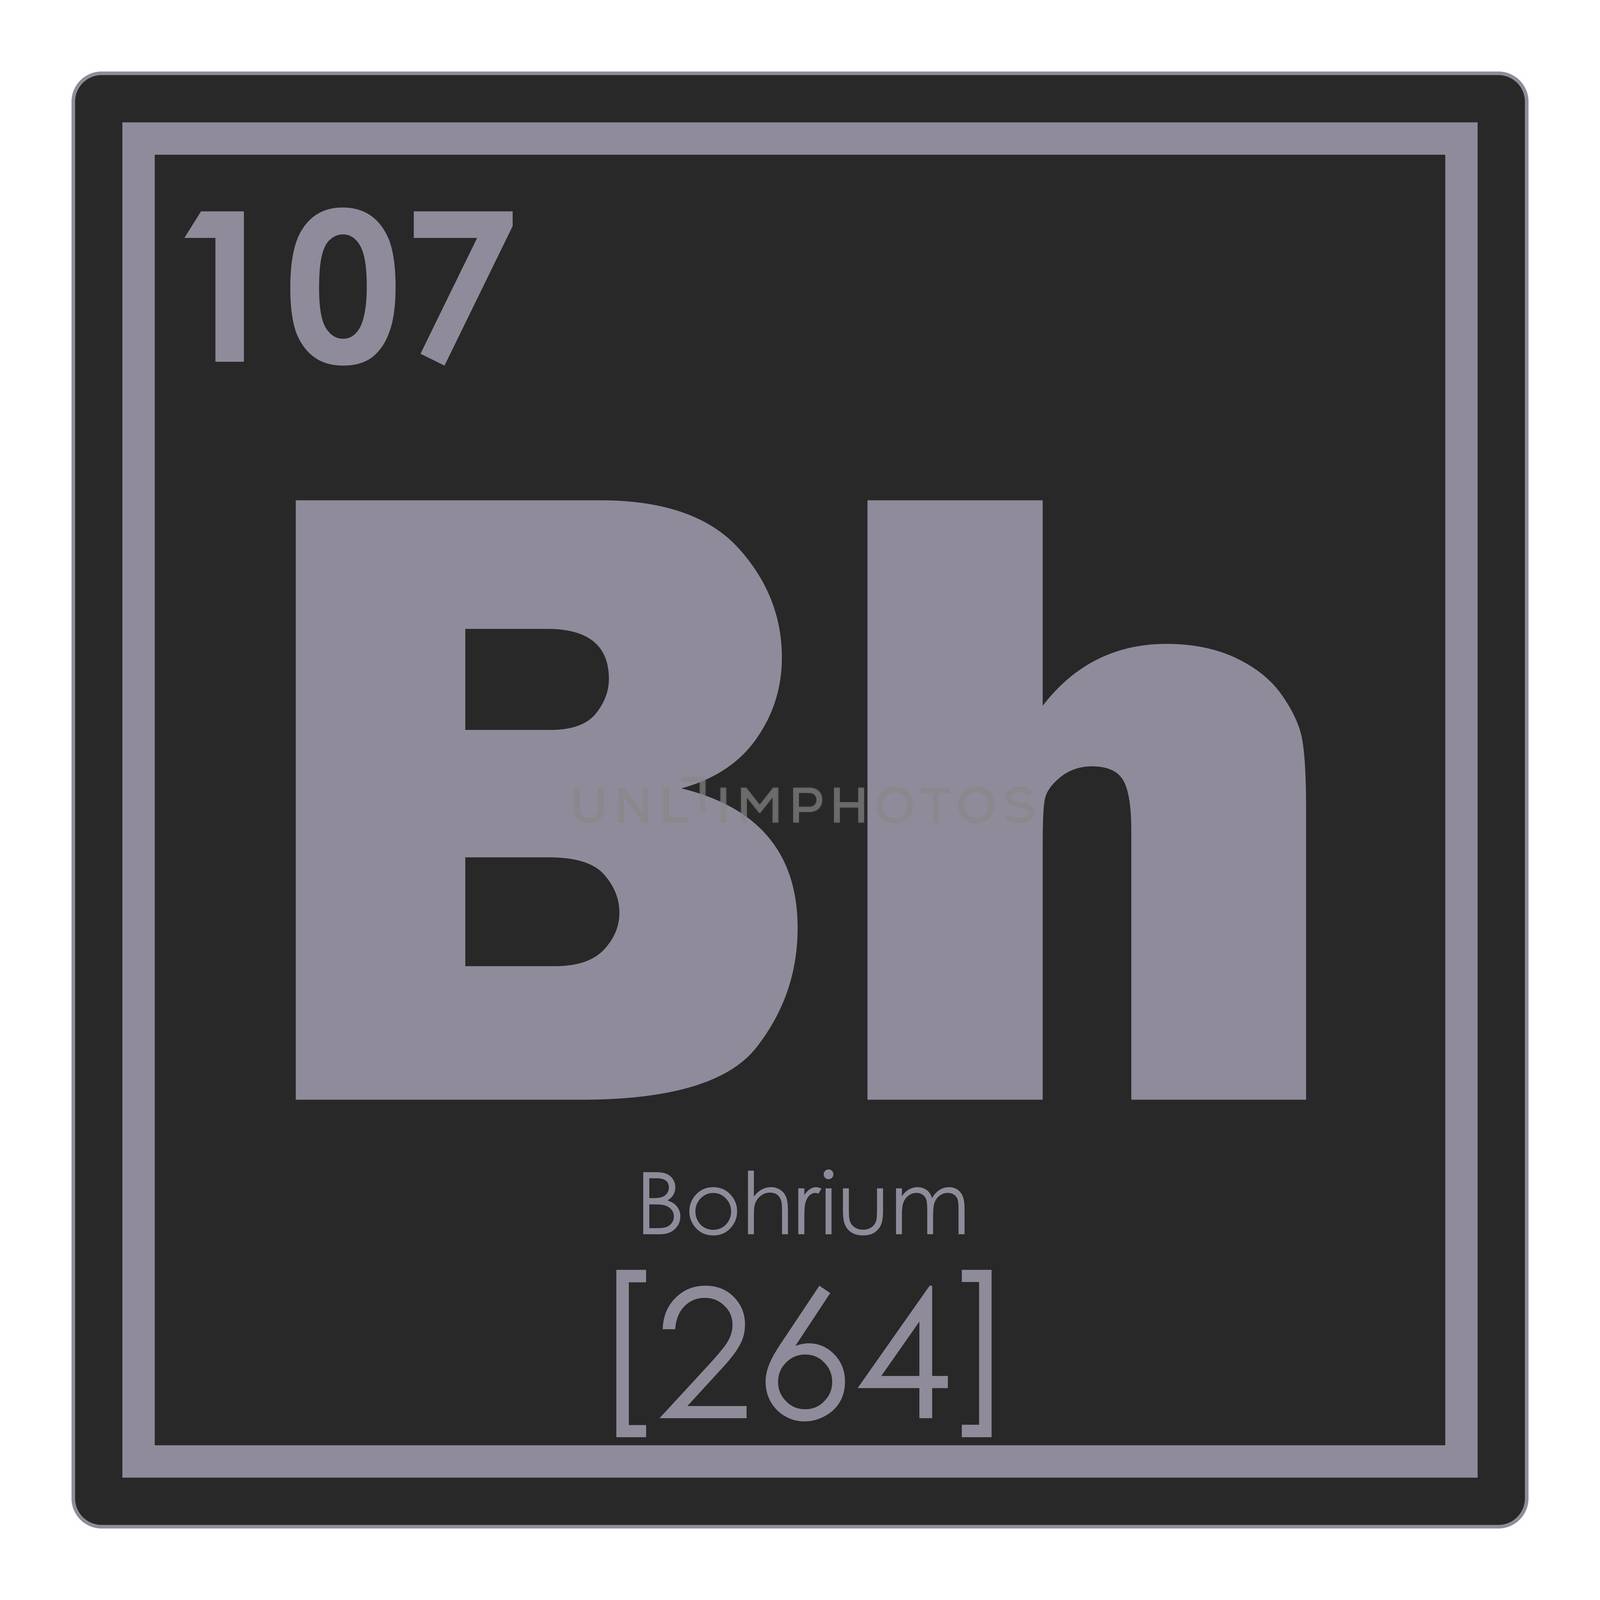 Bohrium chemical element by tony4urban